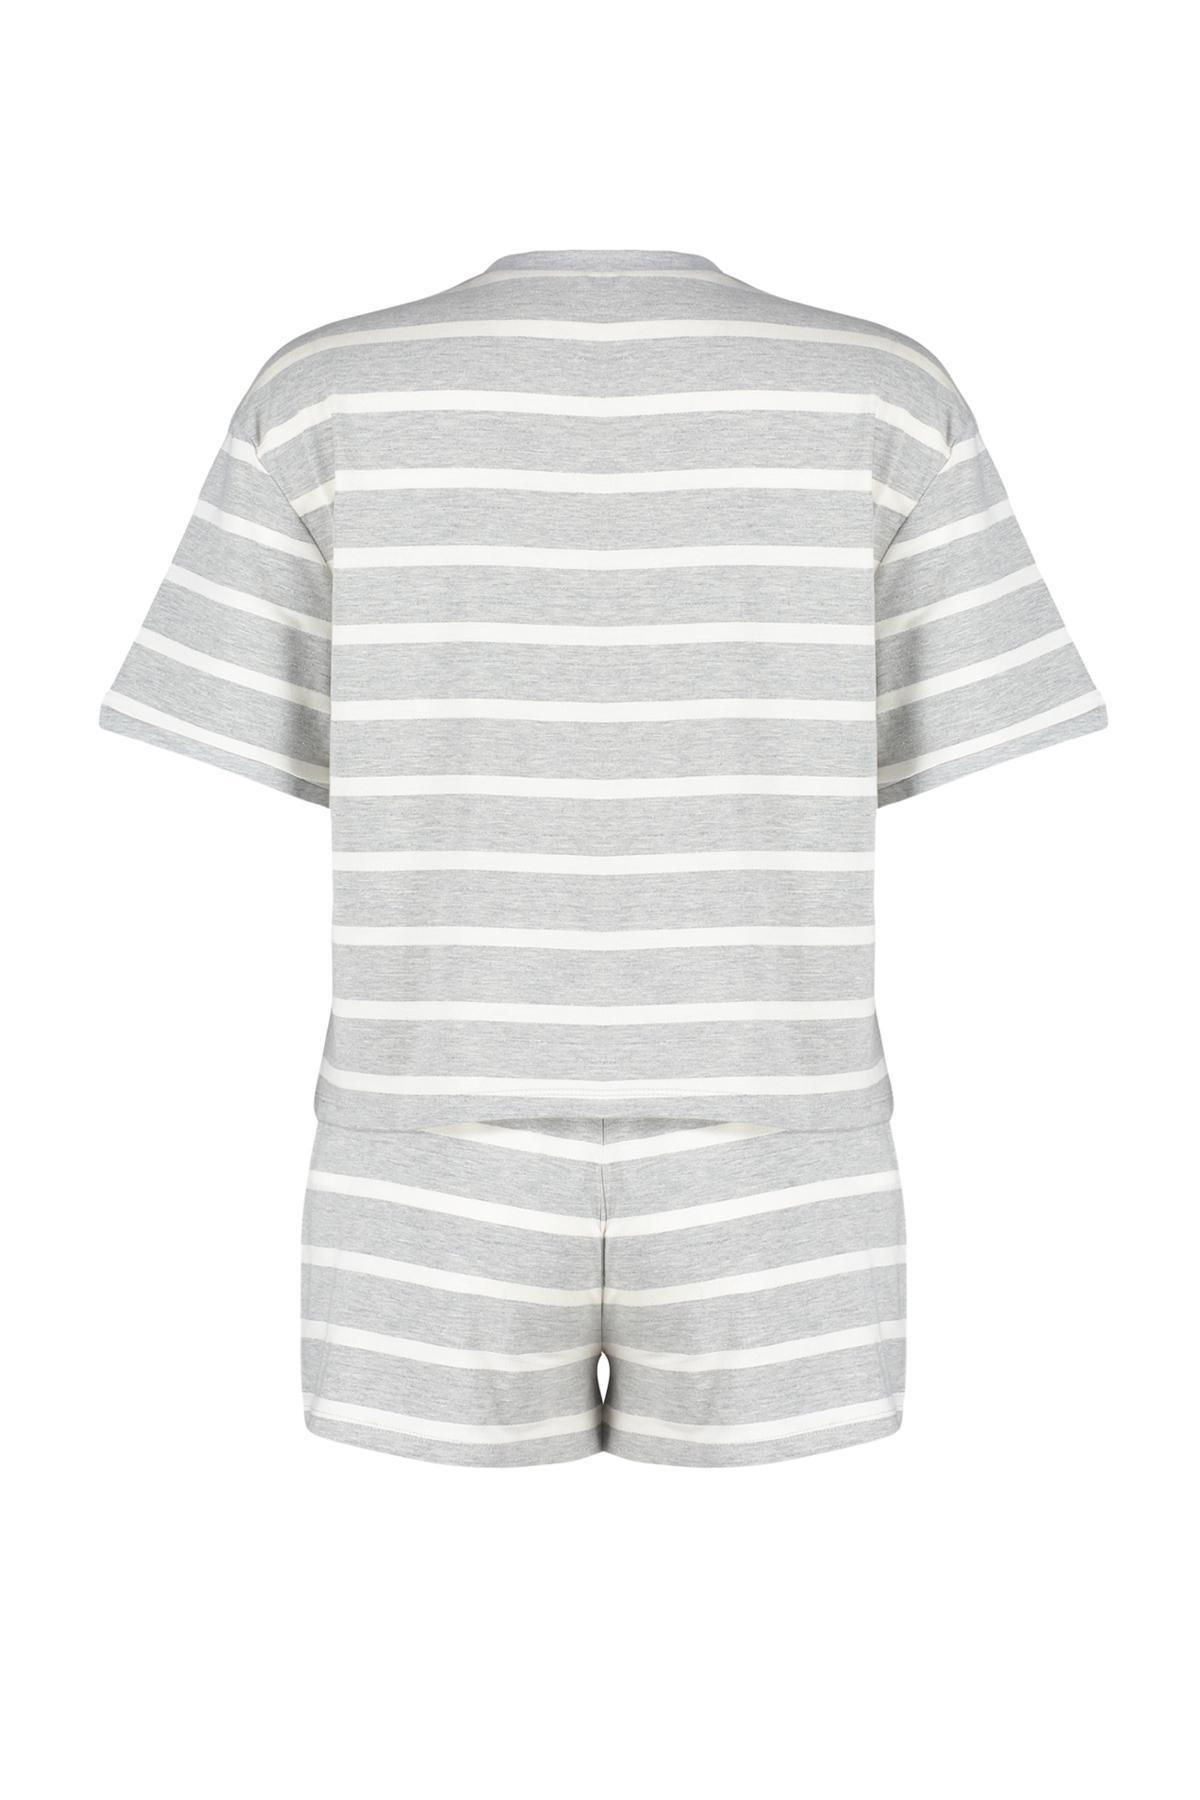 Trendyol - Grey Striped Knitted Pajamas Set